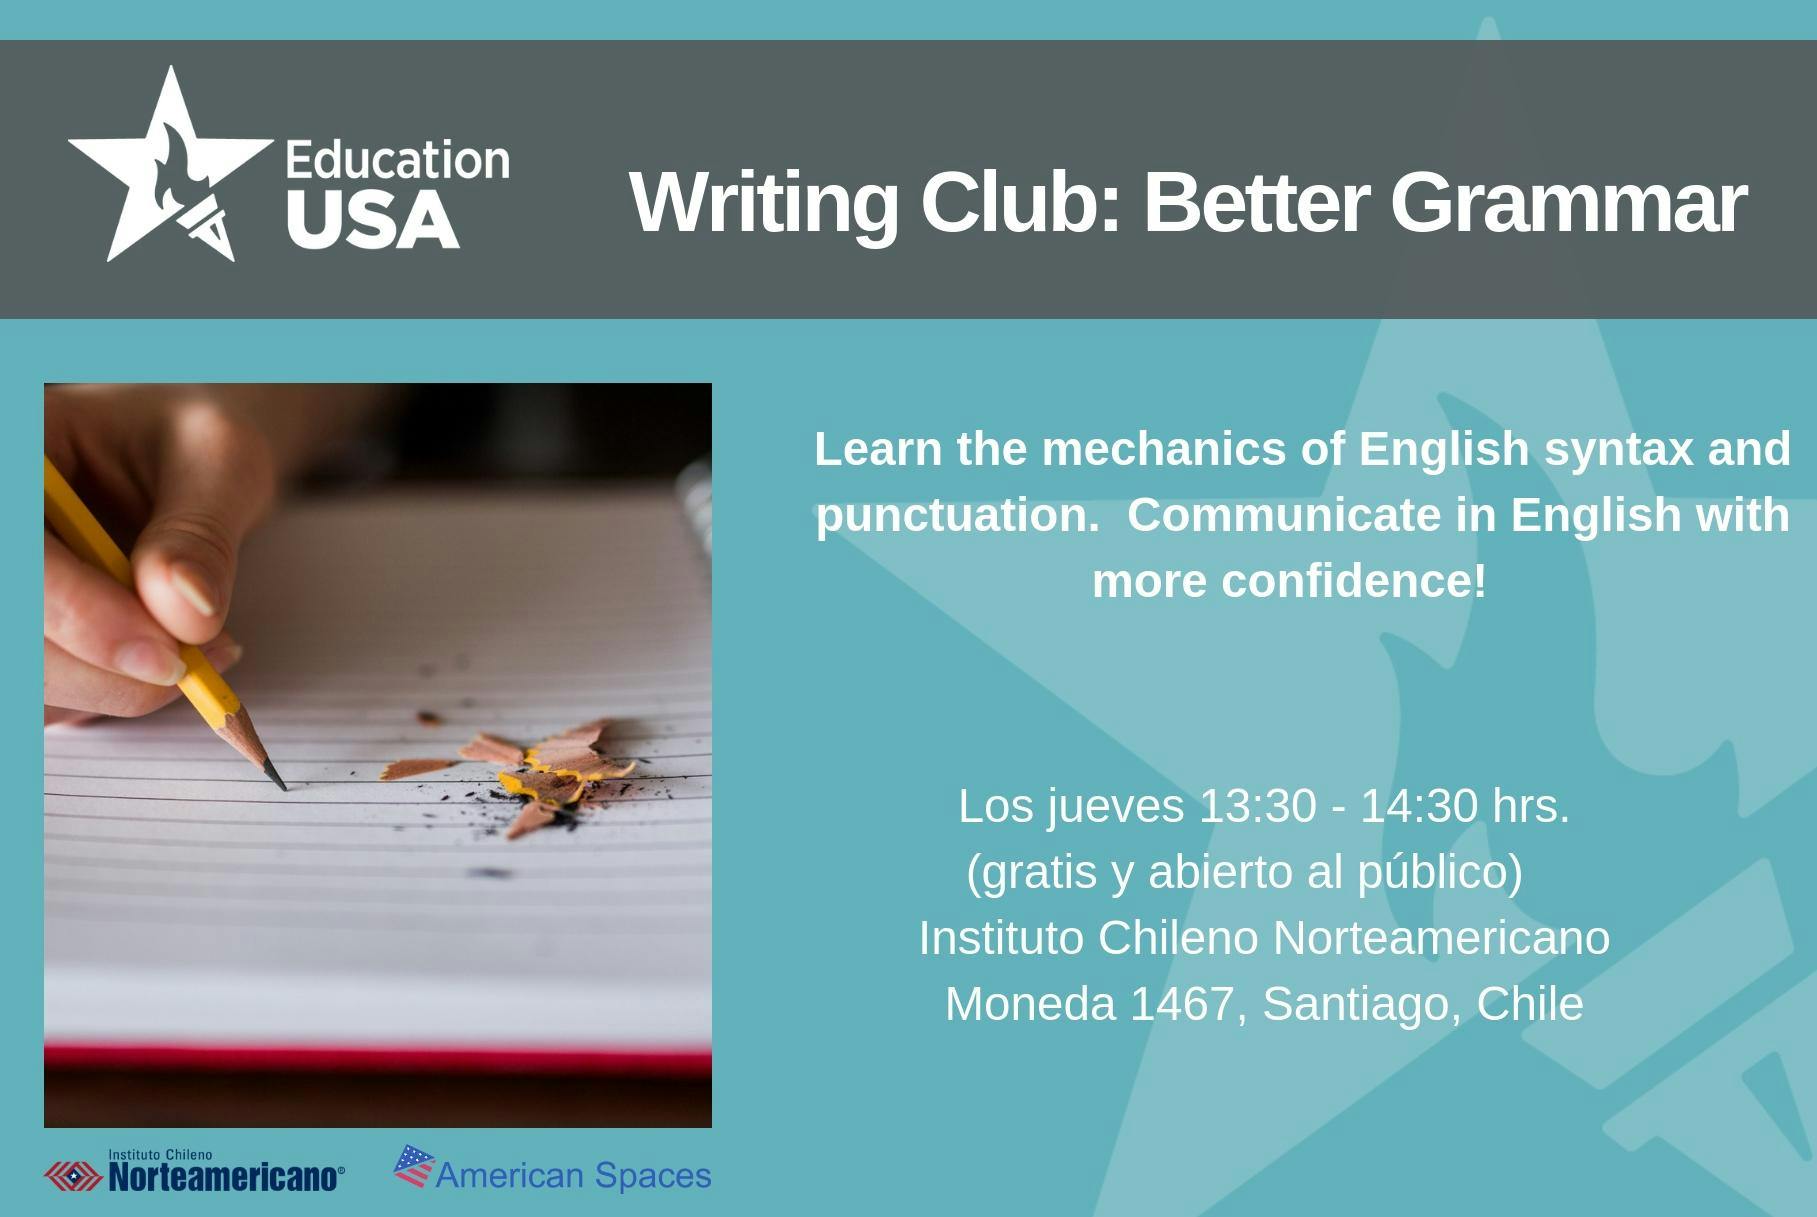 Writing Club Agosto - Better Grammar